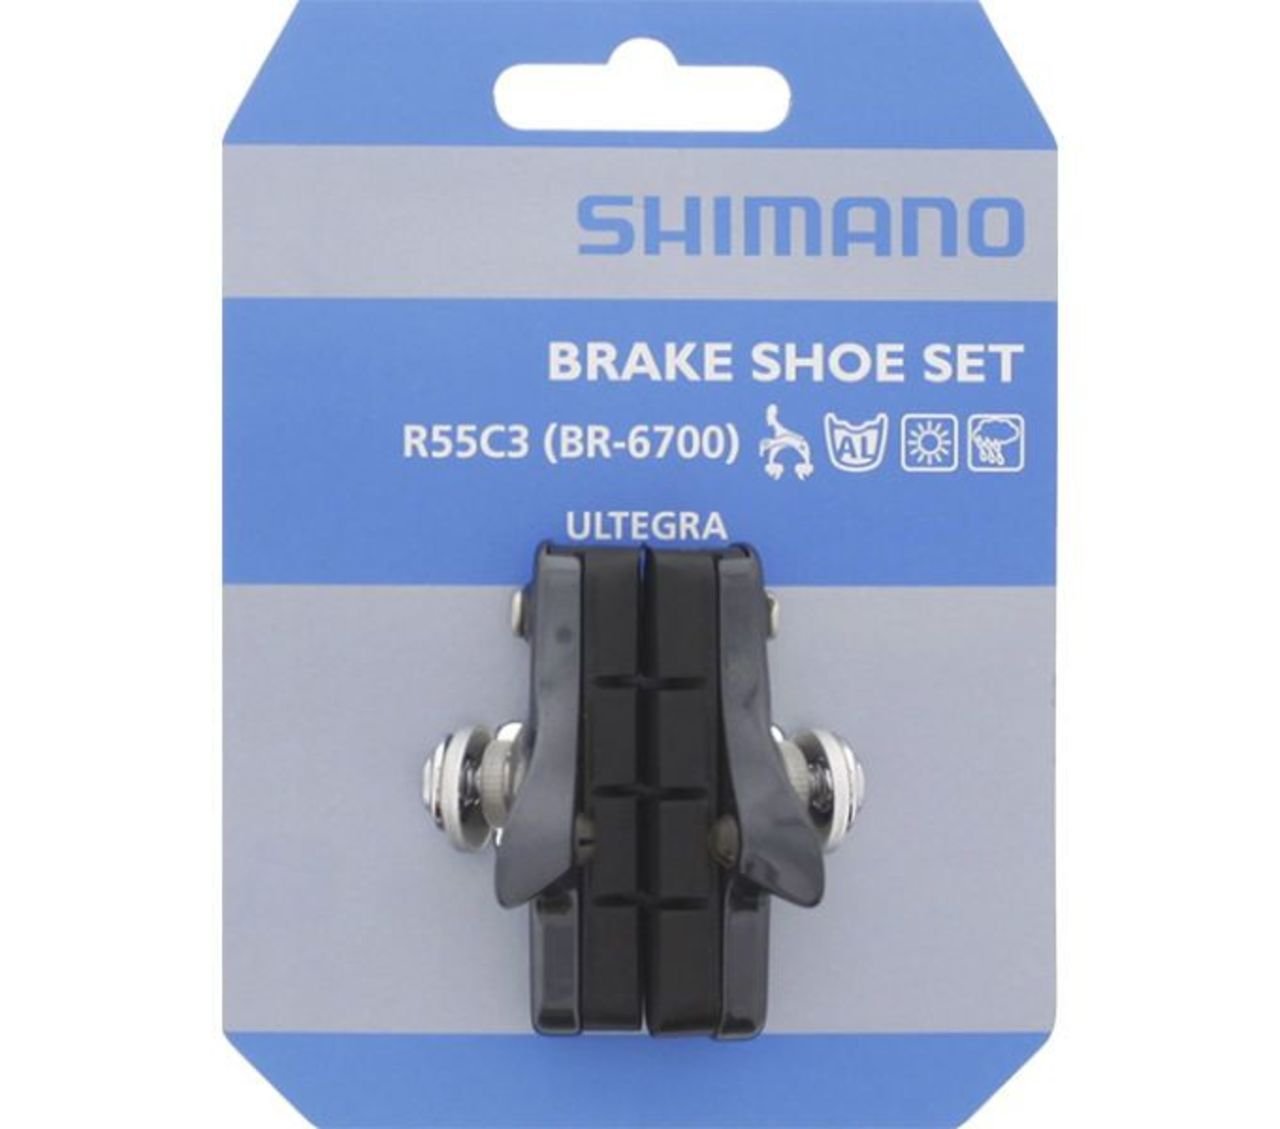 Тормозные колодки Shimano, brake pad, R55C3, Cartridge, for BR-6700, for aluminium rim, 1 pair, A154773 тормозные колодки m755 для дискового тормоза shimano xt m755 m755 dh grimmech system 8 sun rac